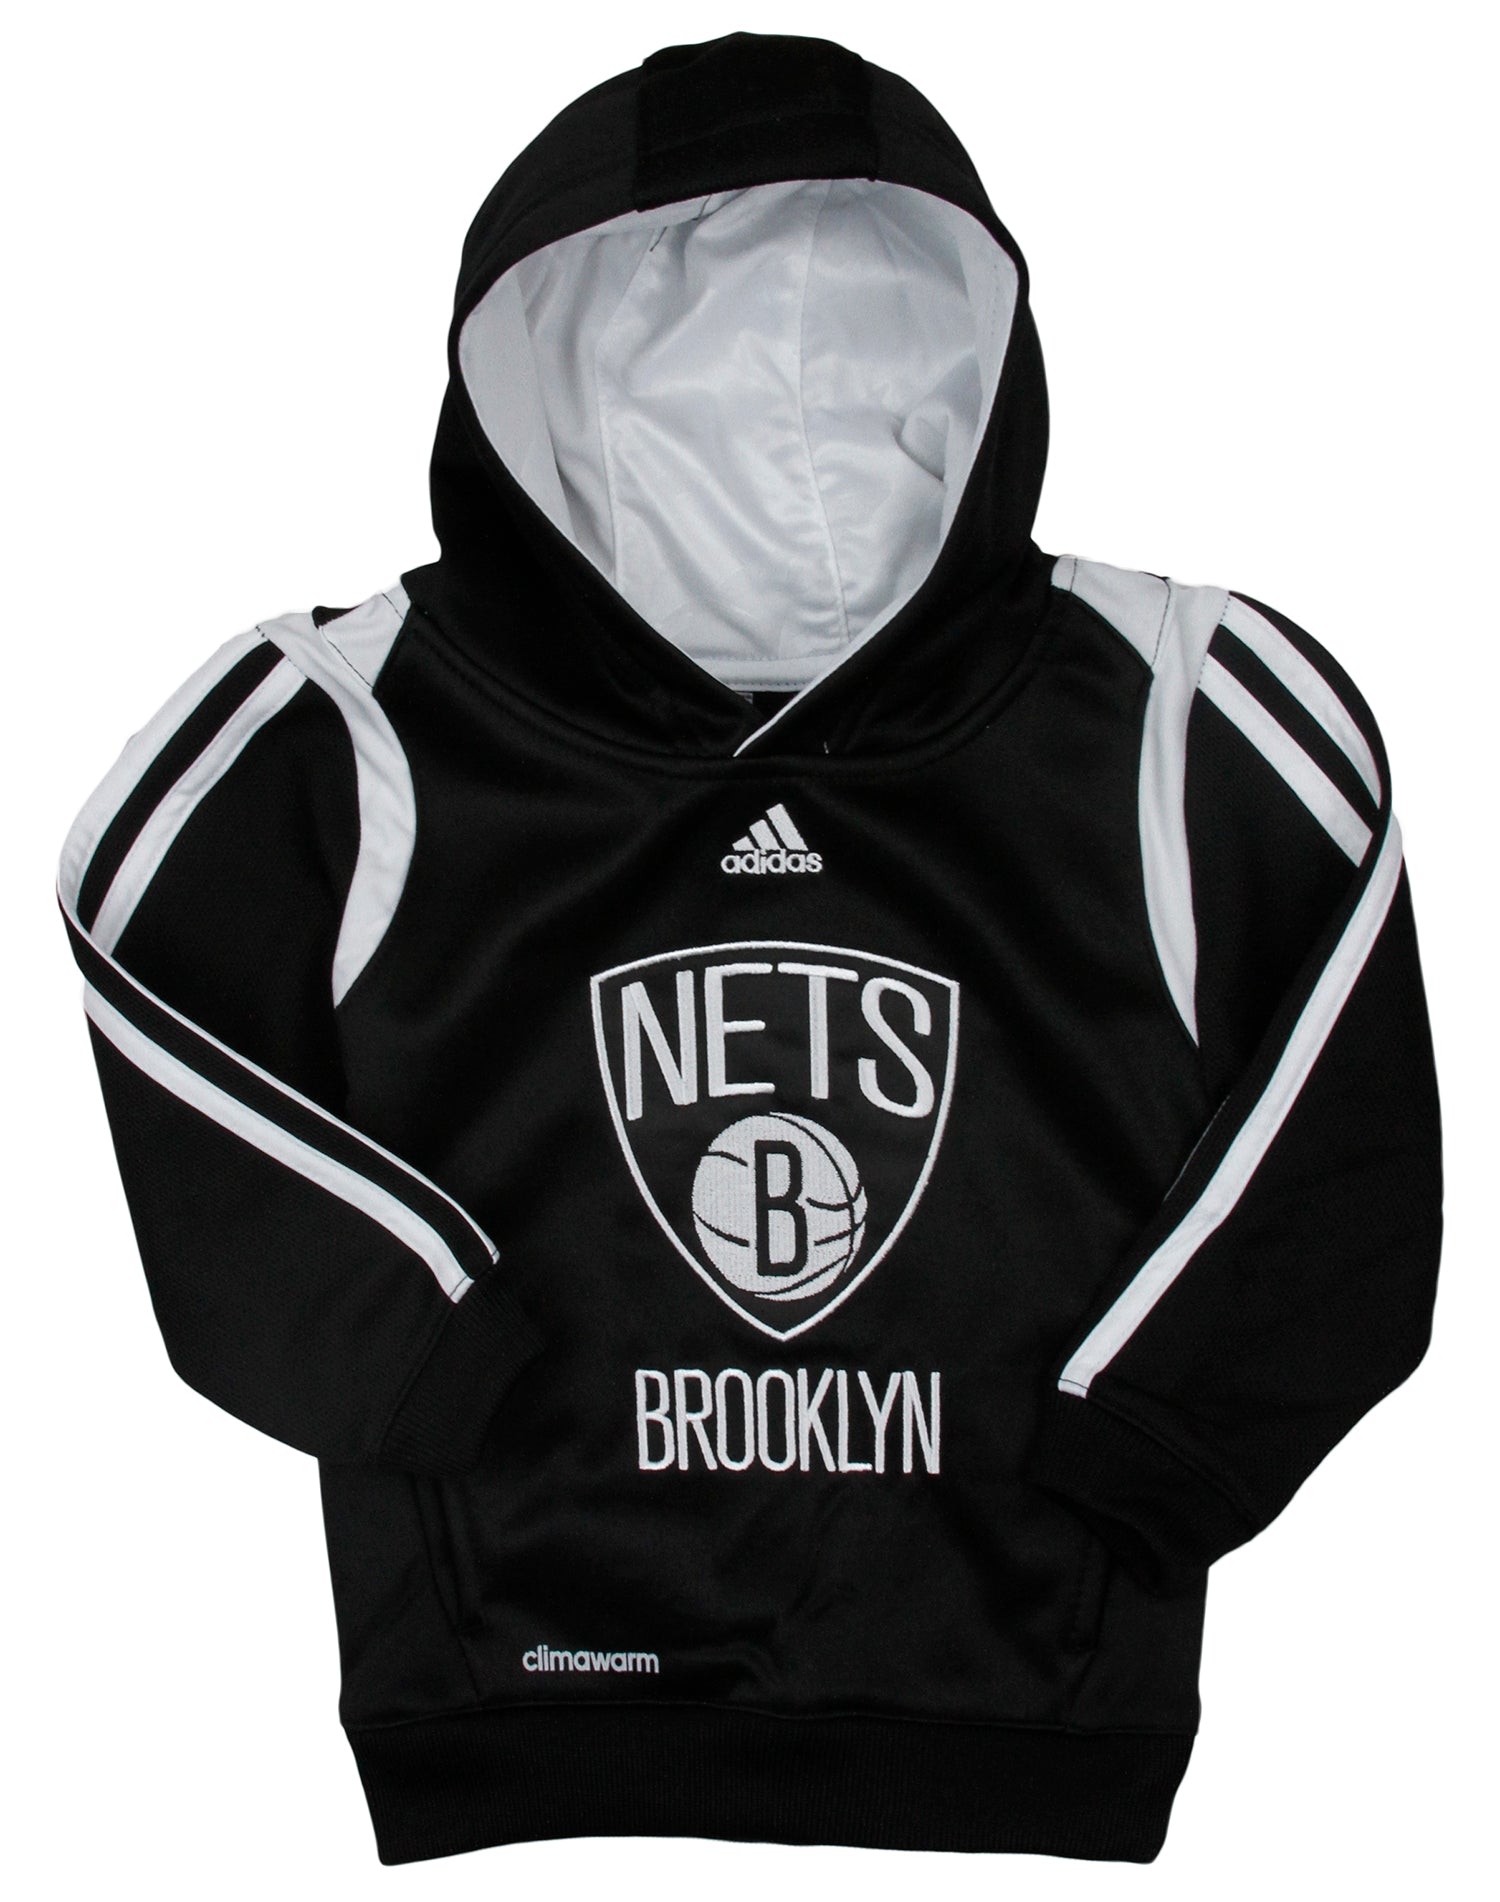 BROOKLYN NETS Hoodie Sweatshirt Youth Size L - 7 Basketball NBA